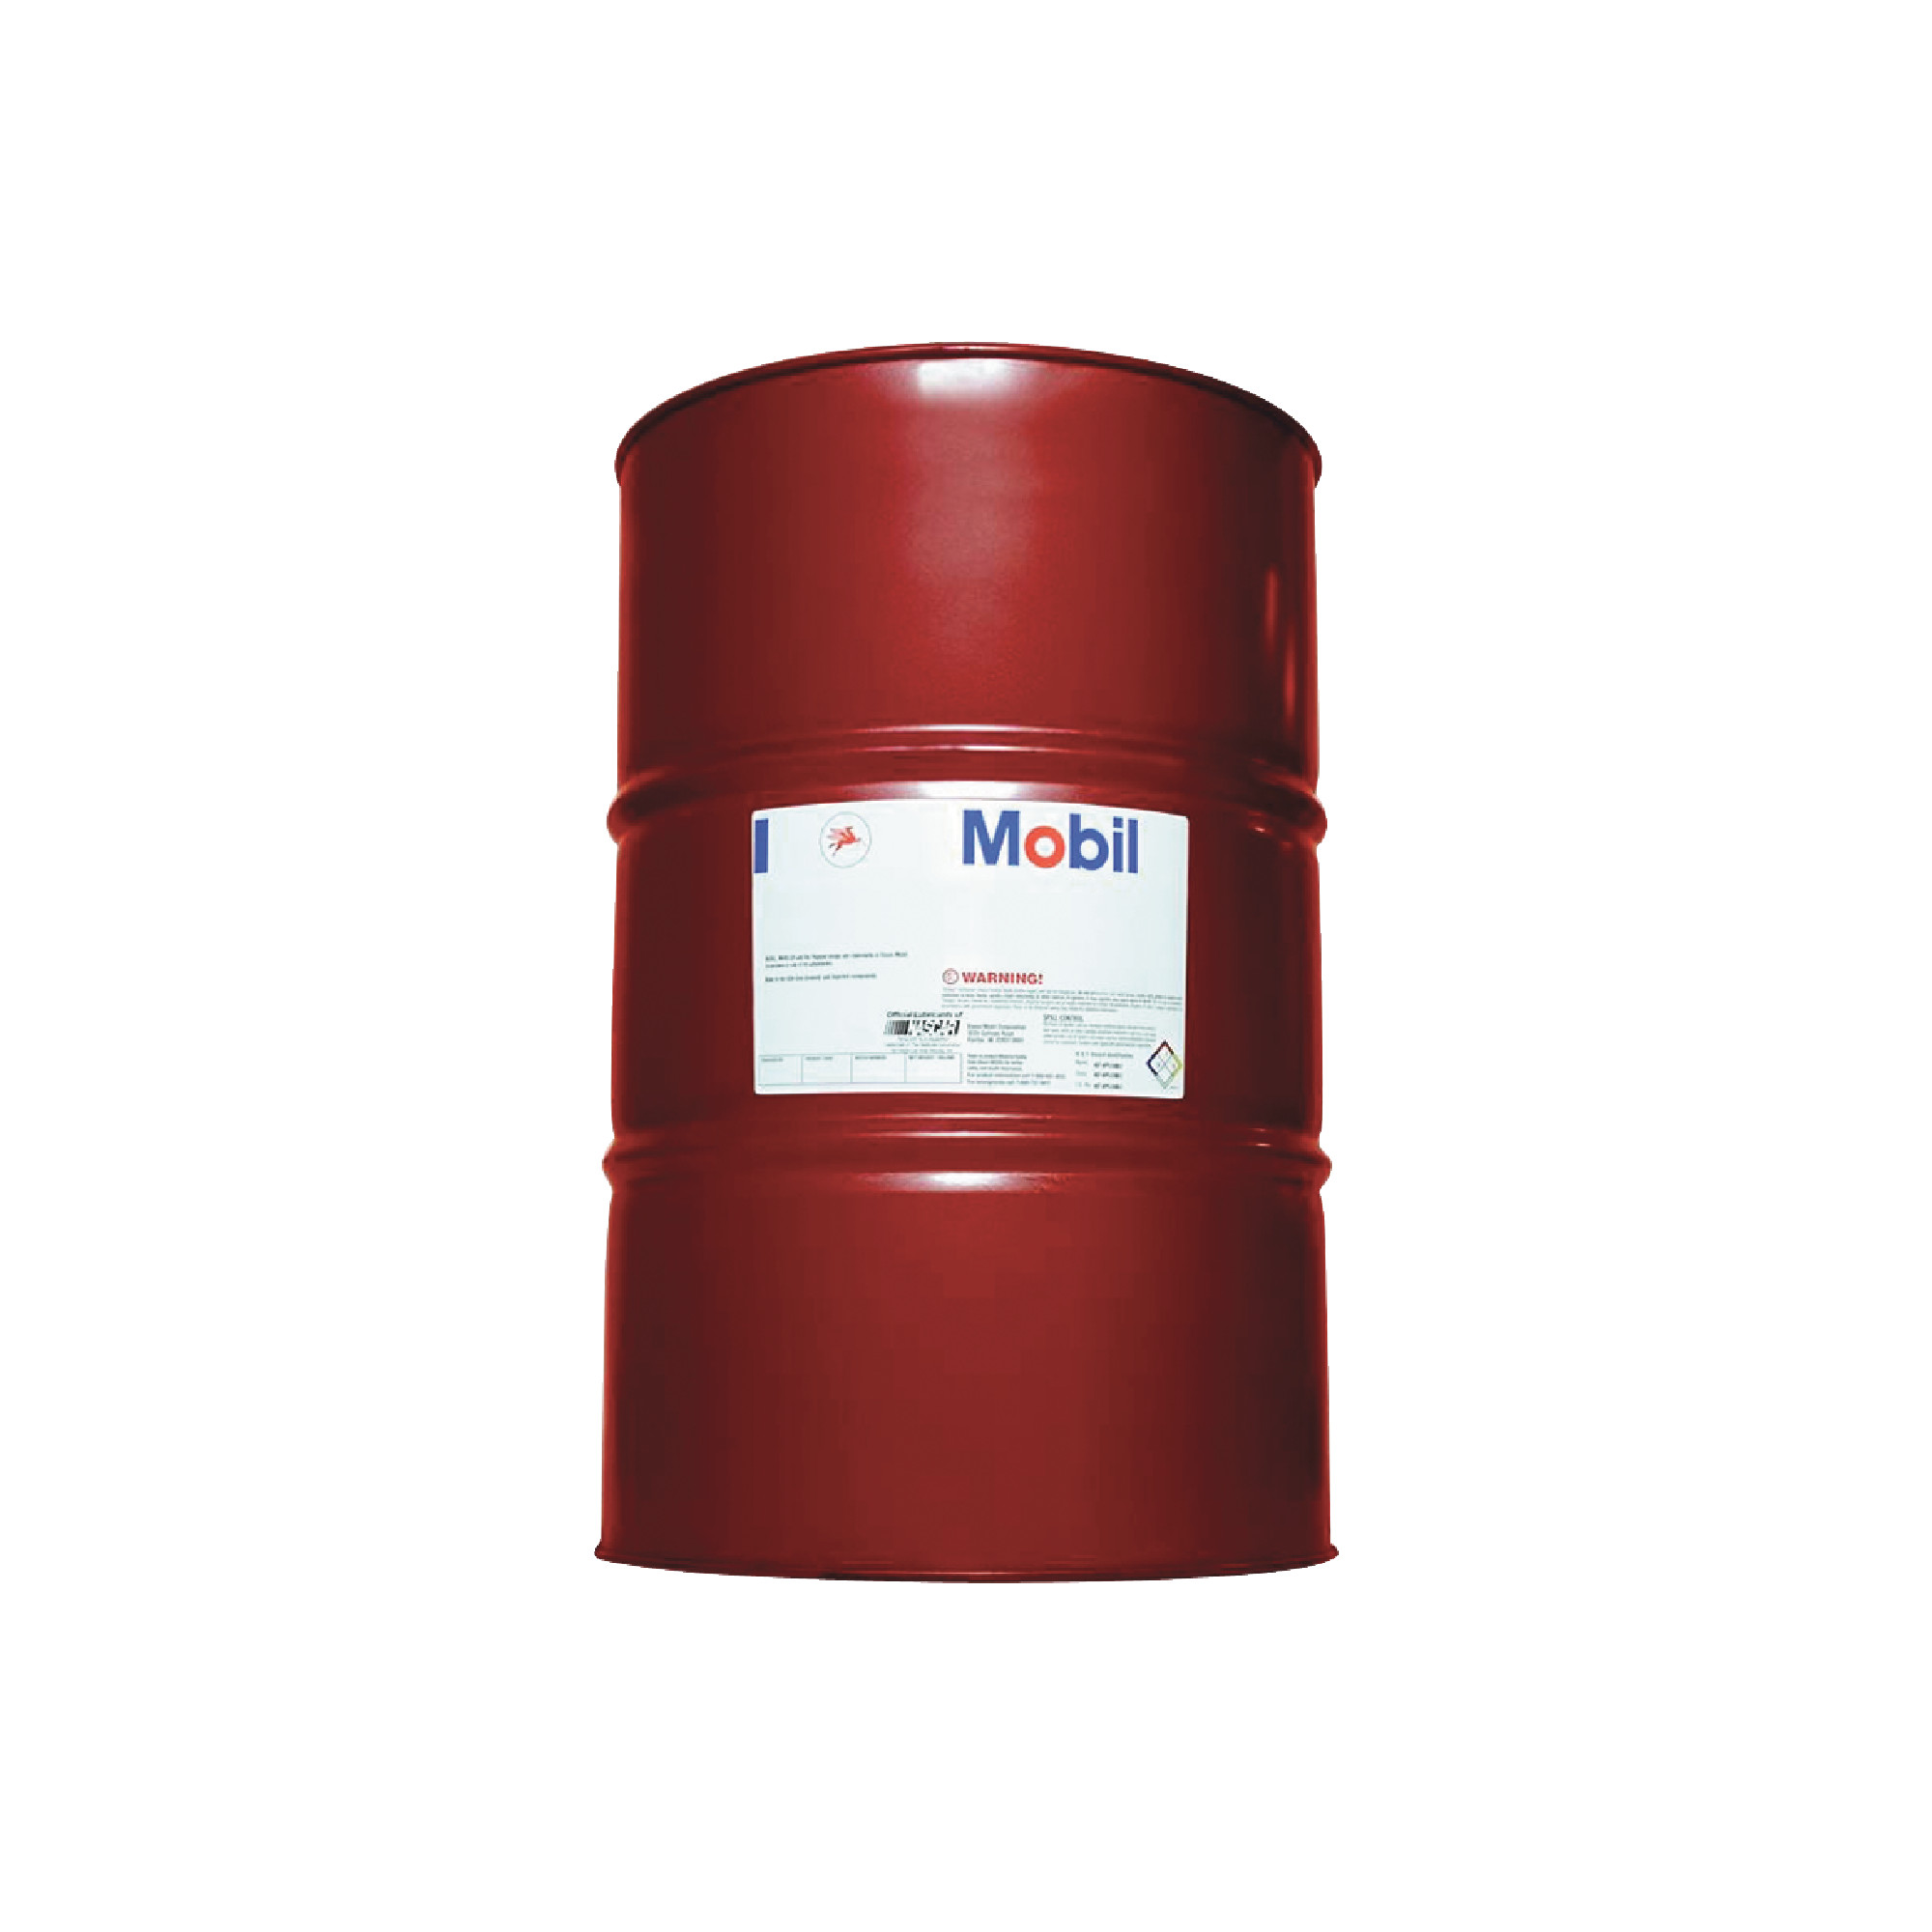 MOBIL DTE 10 EXCEL 32 55 Gallon Drum Hydraulic Fluid